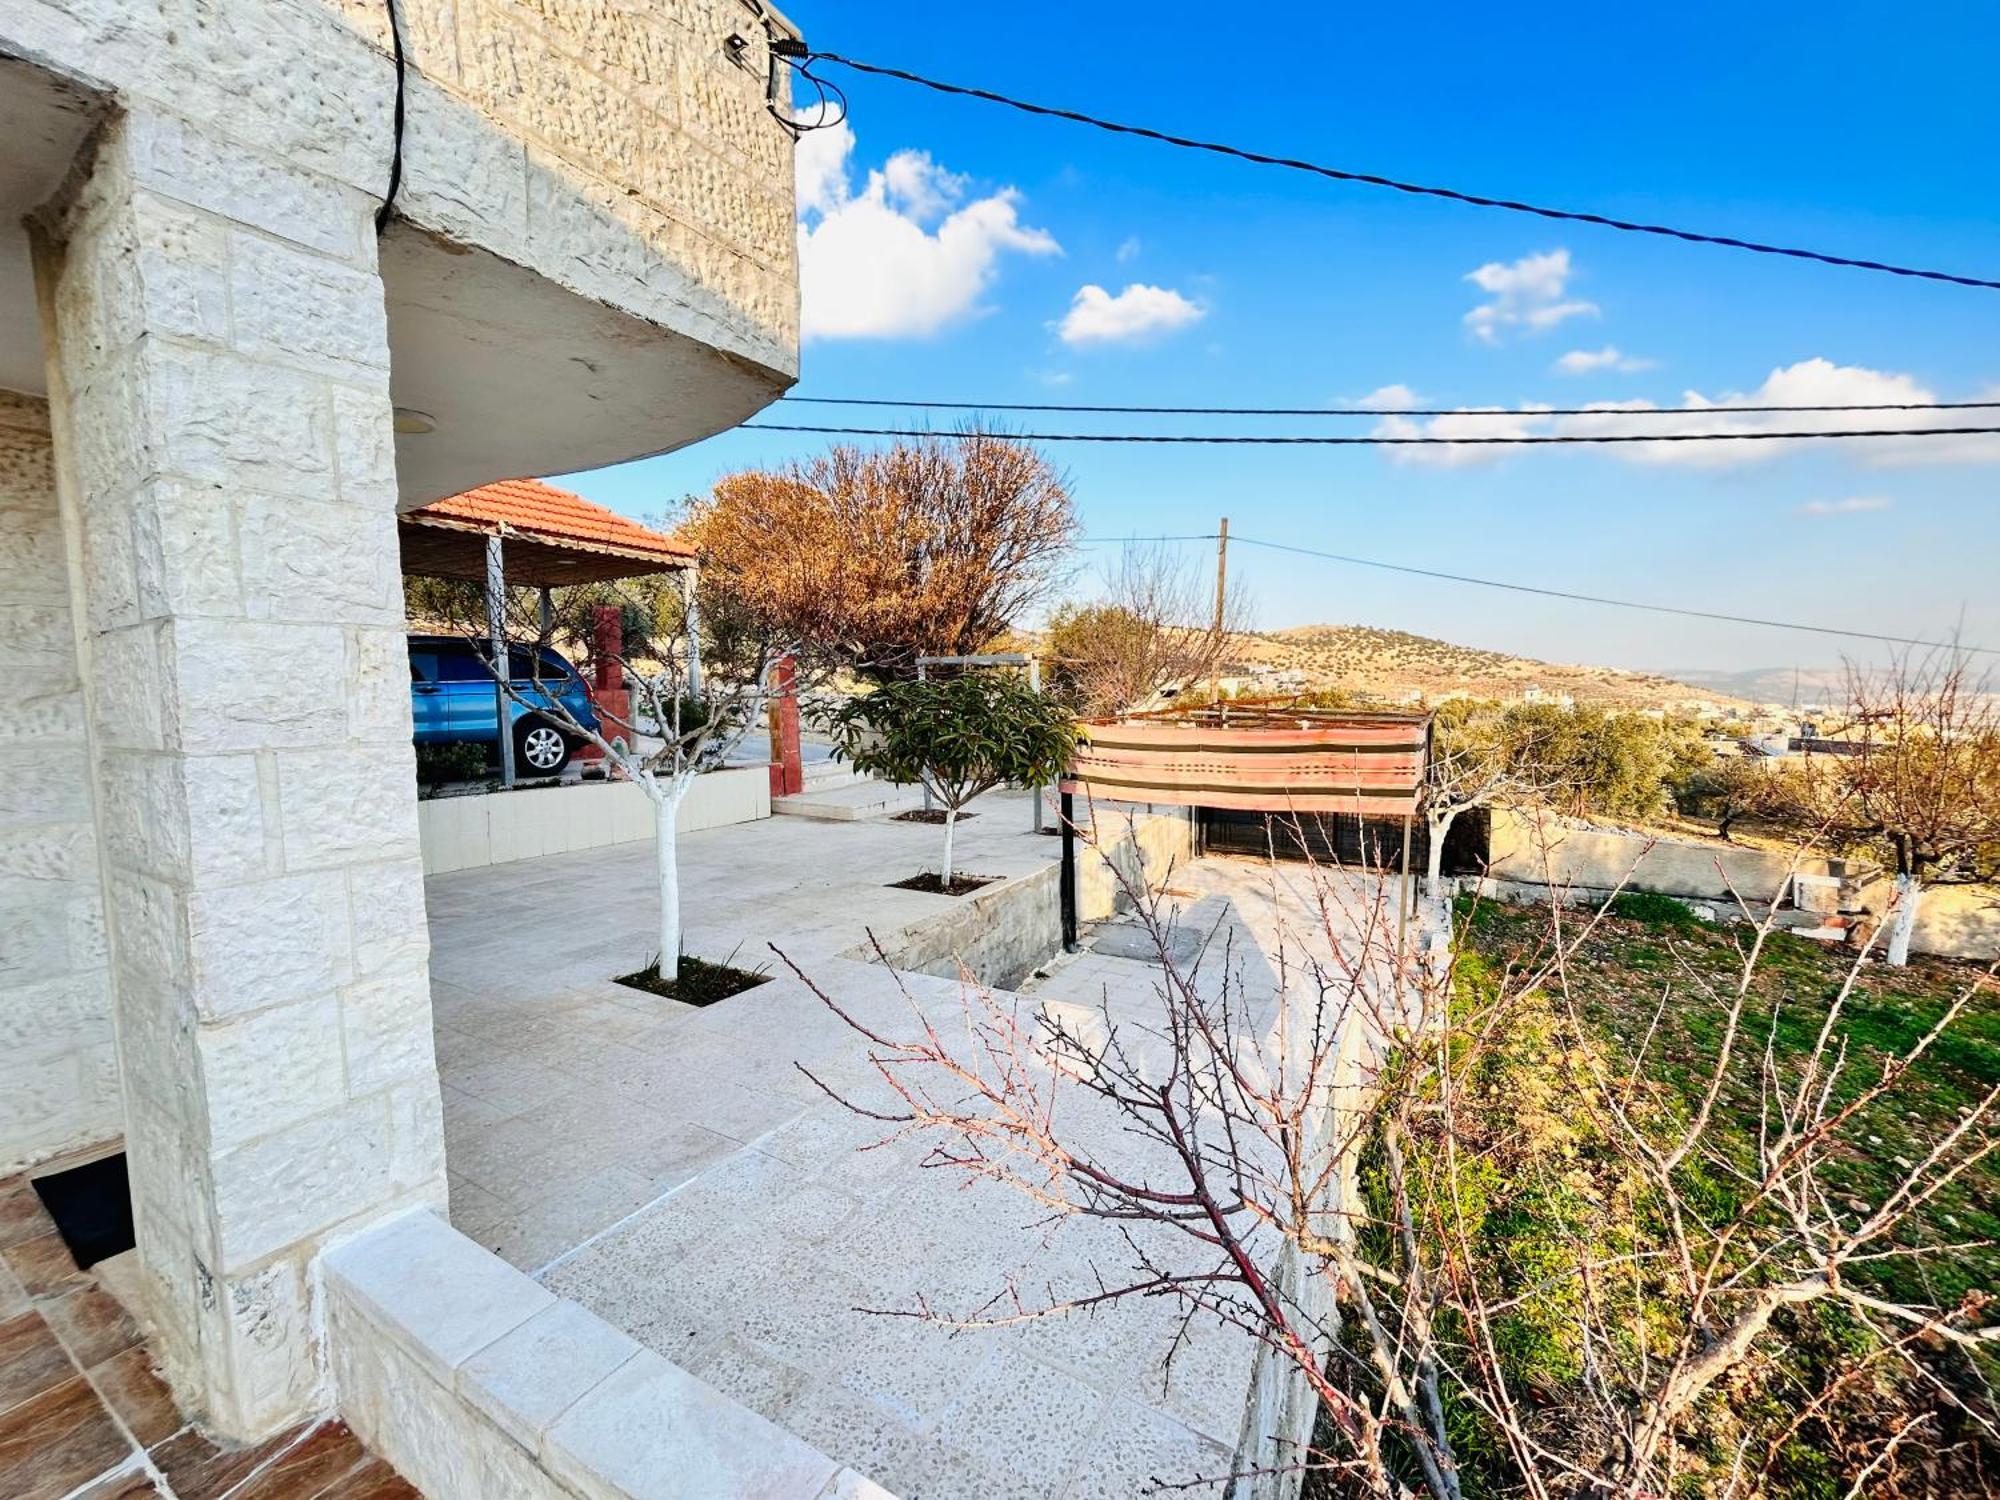 Apartment Between Ajloun Castle And Jerash Ruins 杰拉什 外观 照片